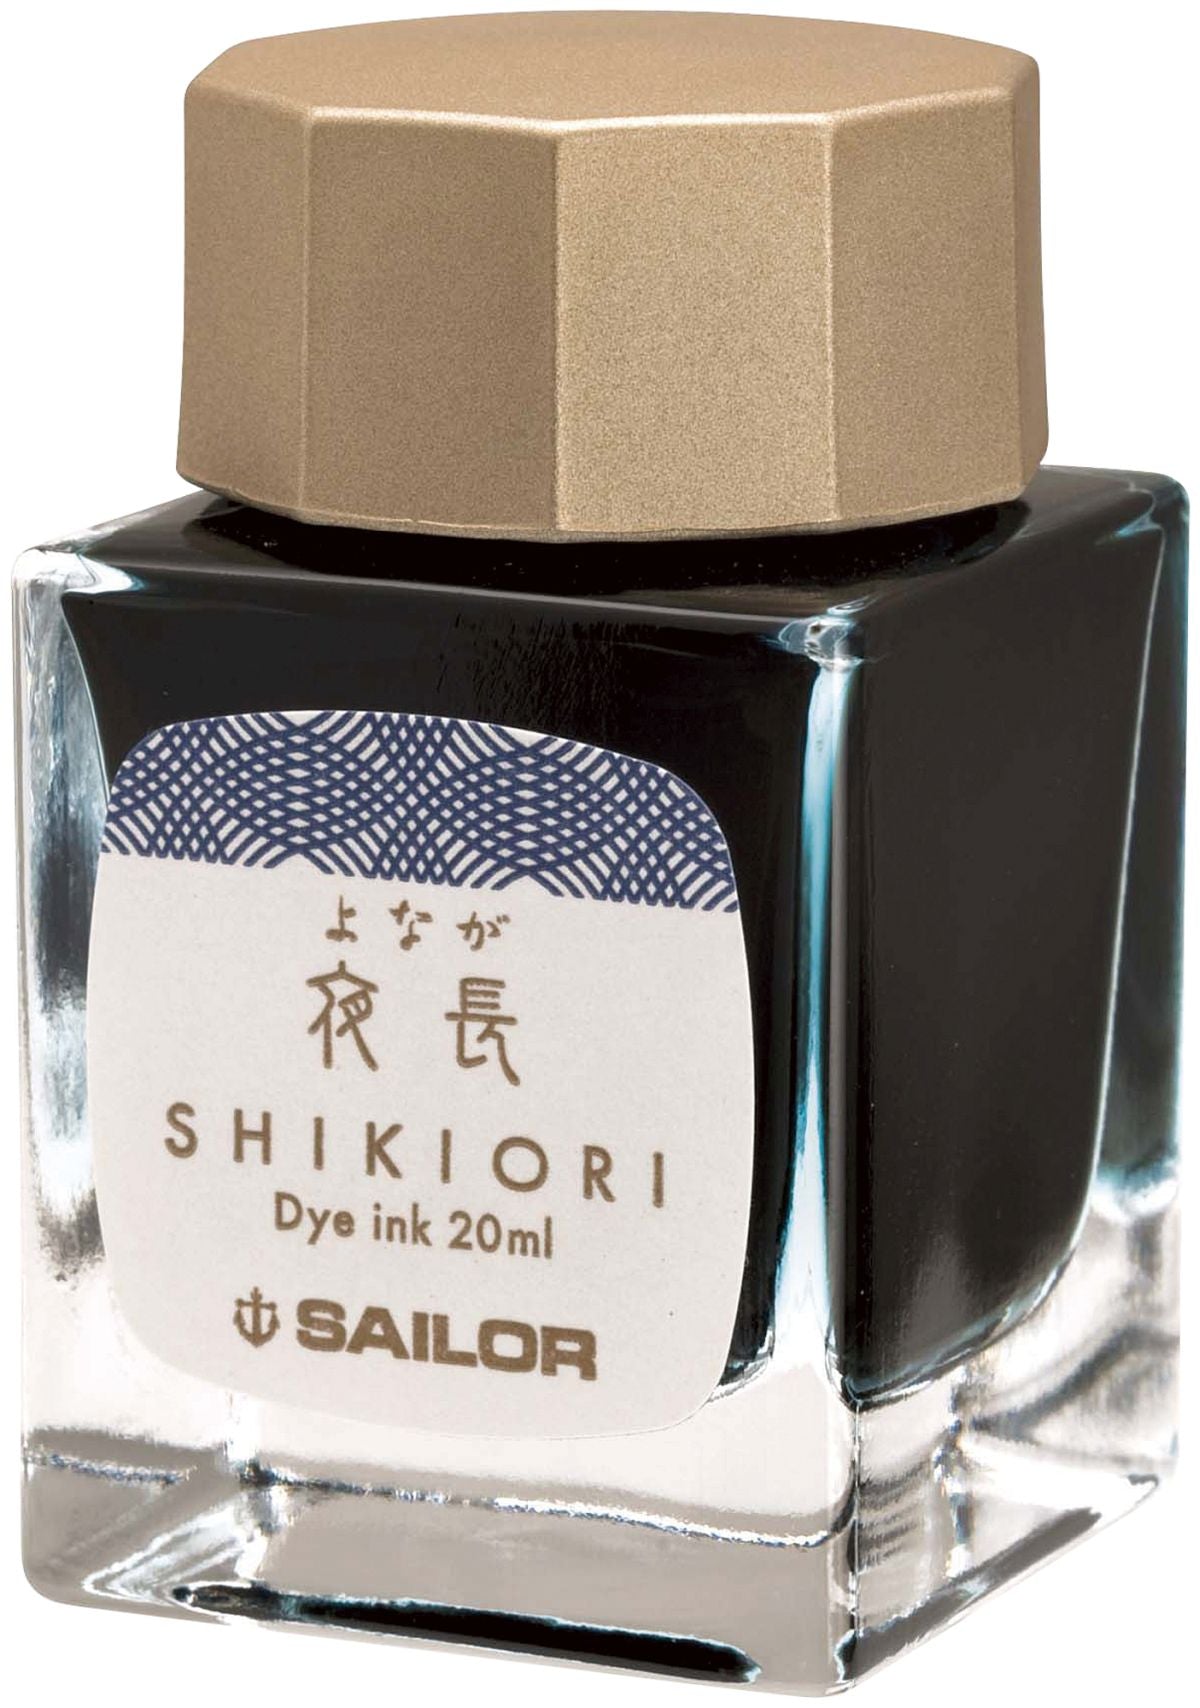 Sailor jentle ink - Yonaga (dark blue)